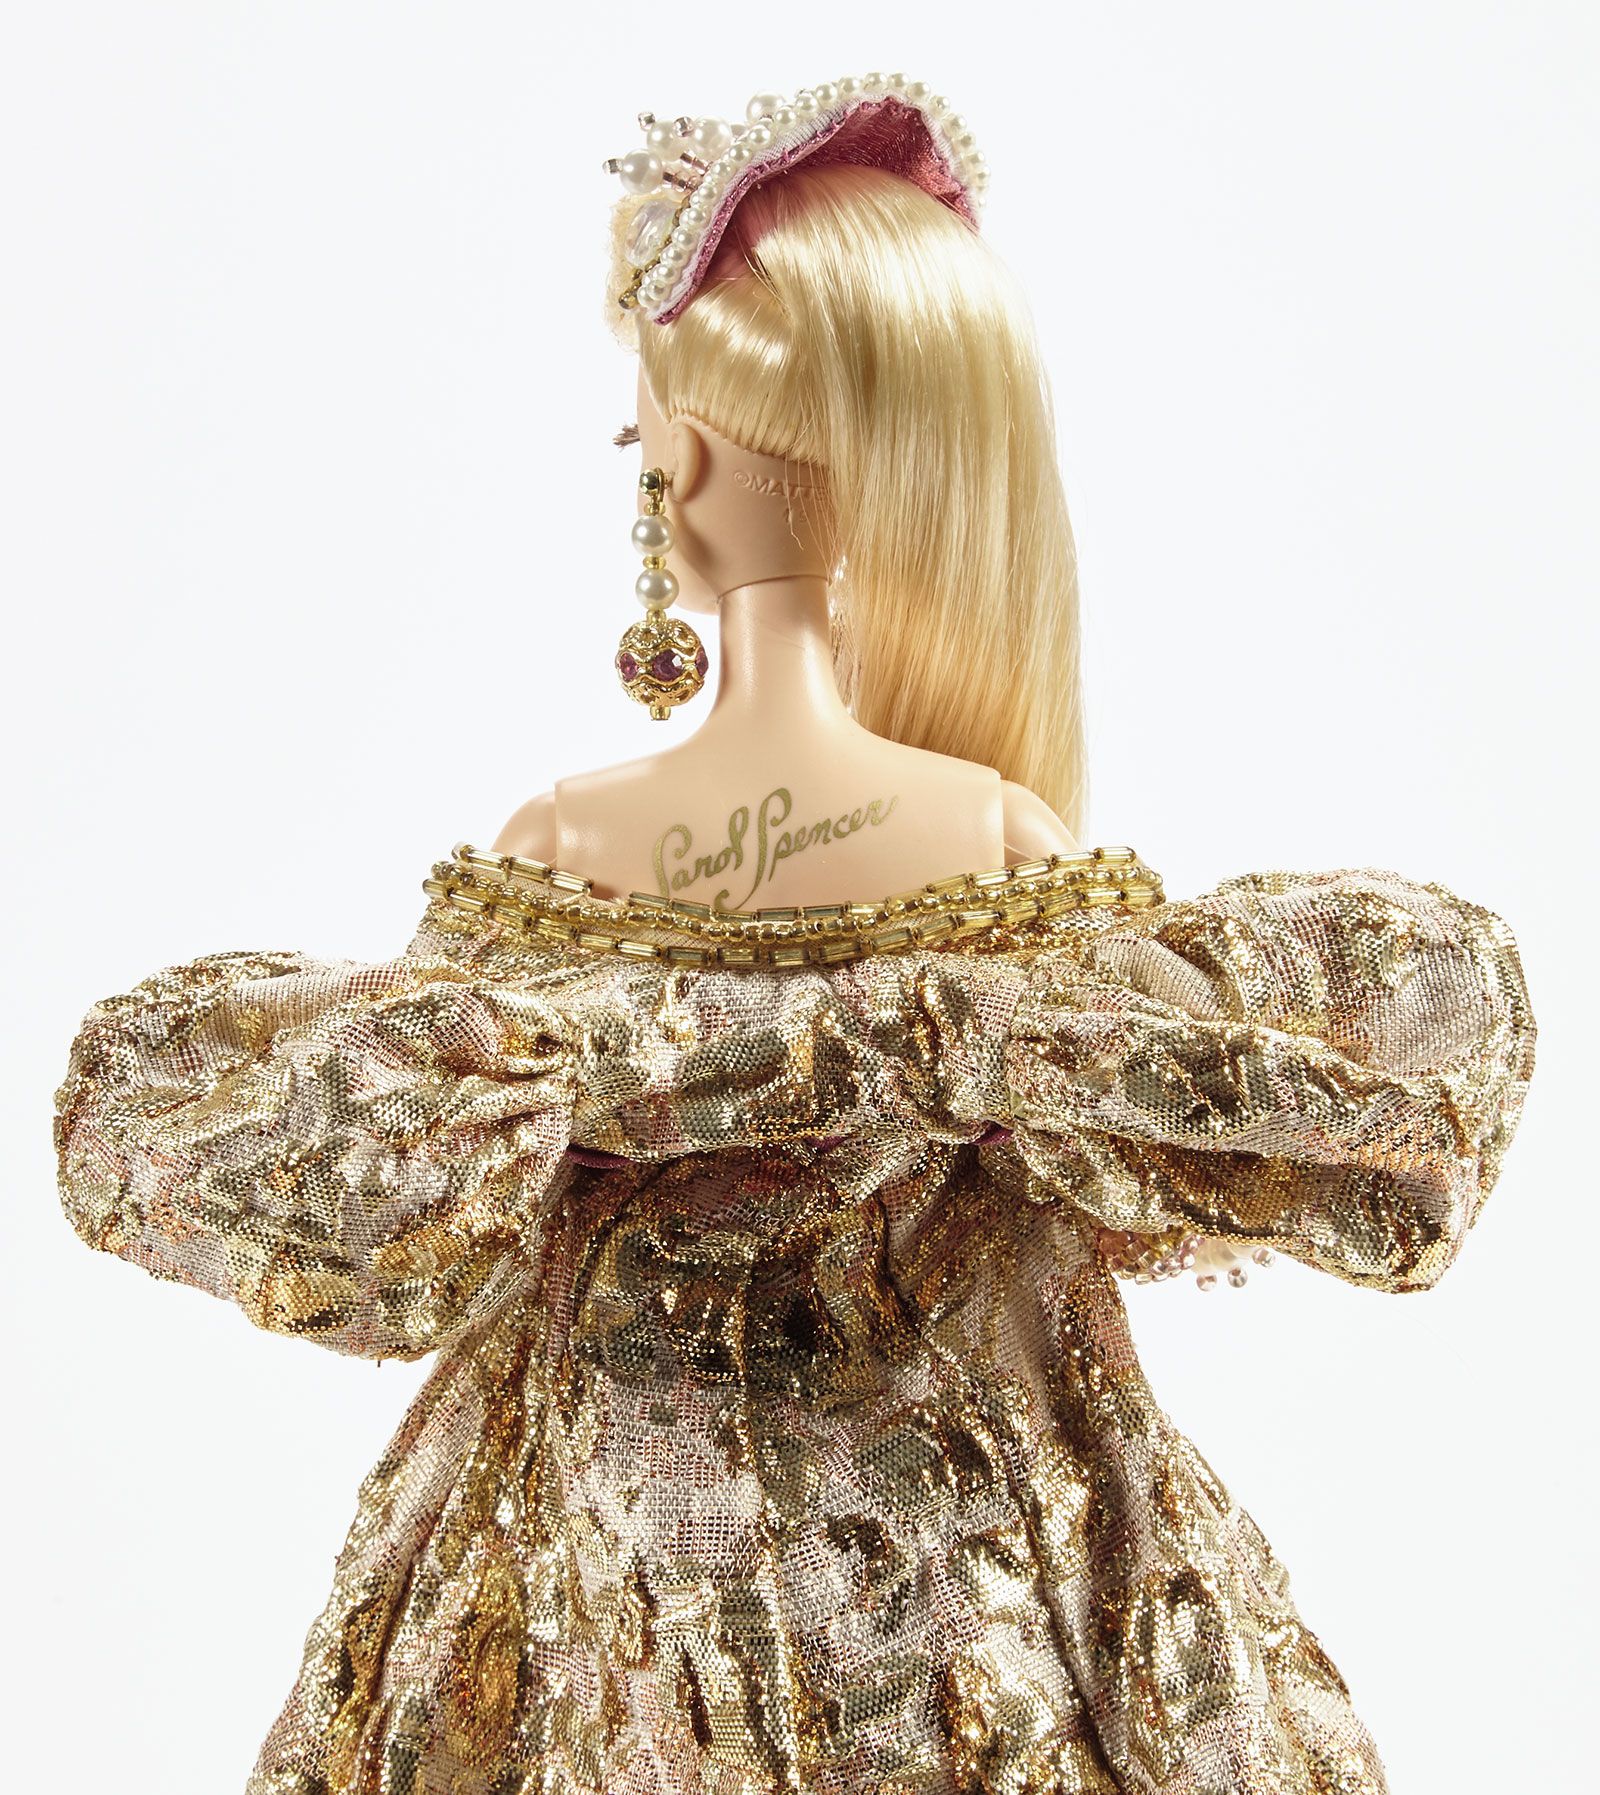 Dressing Barbie: Meet the designer who created a miniature fashion icon -  KTVZ